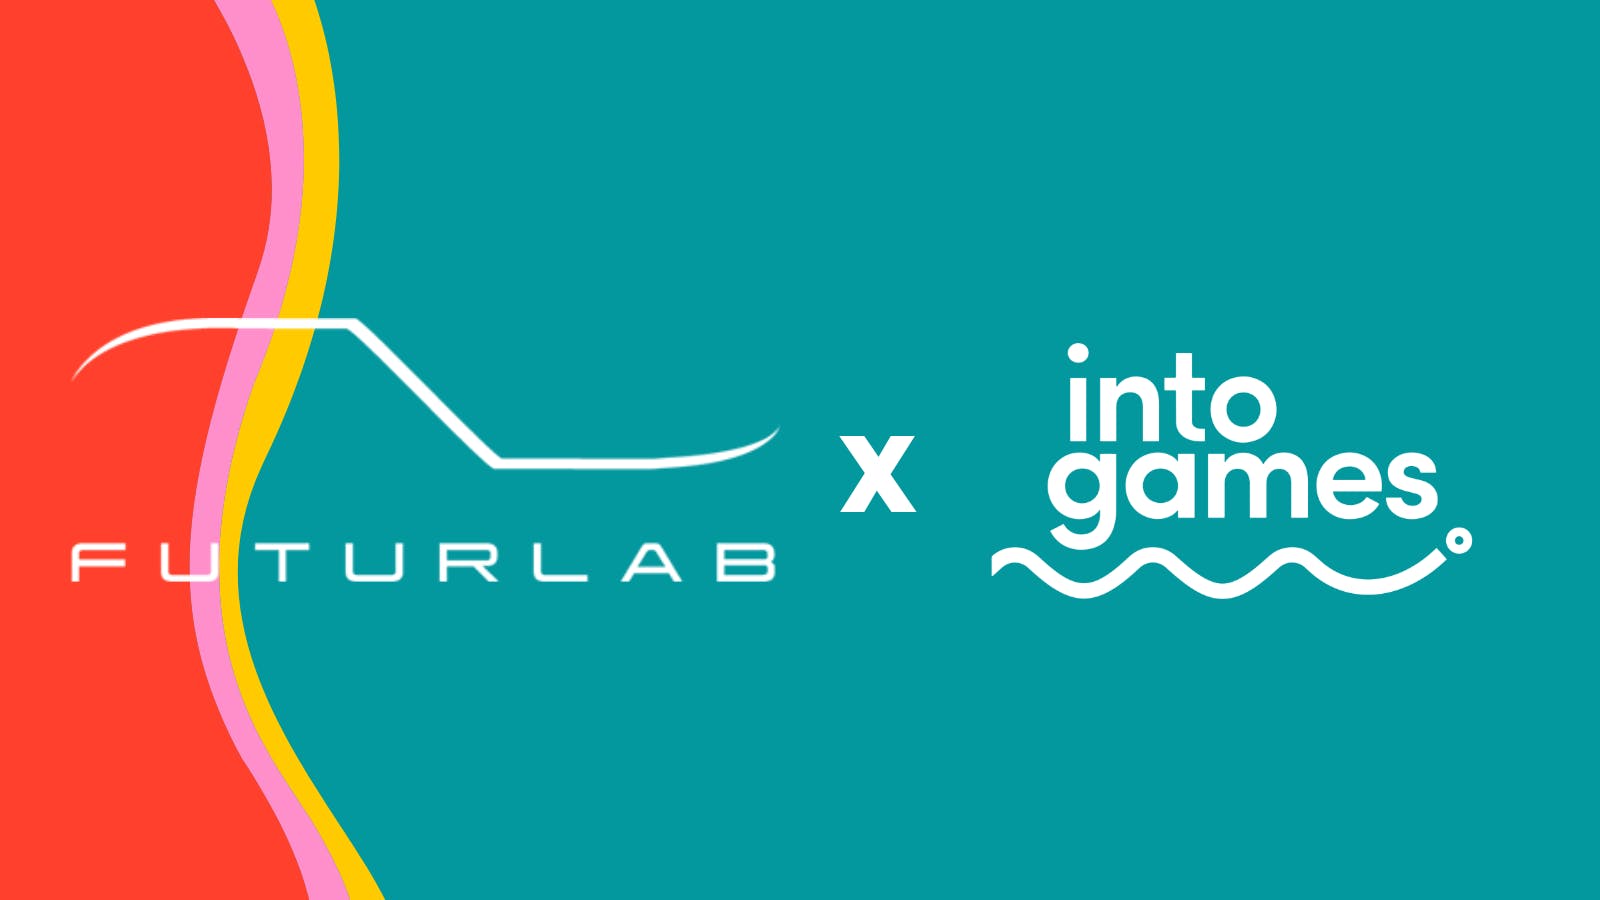 FuturLab x Into Games Partnership!